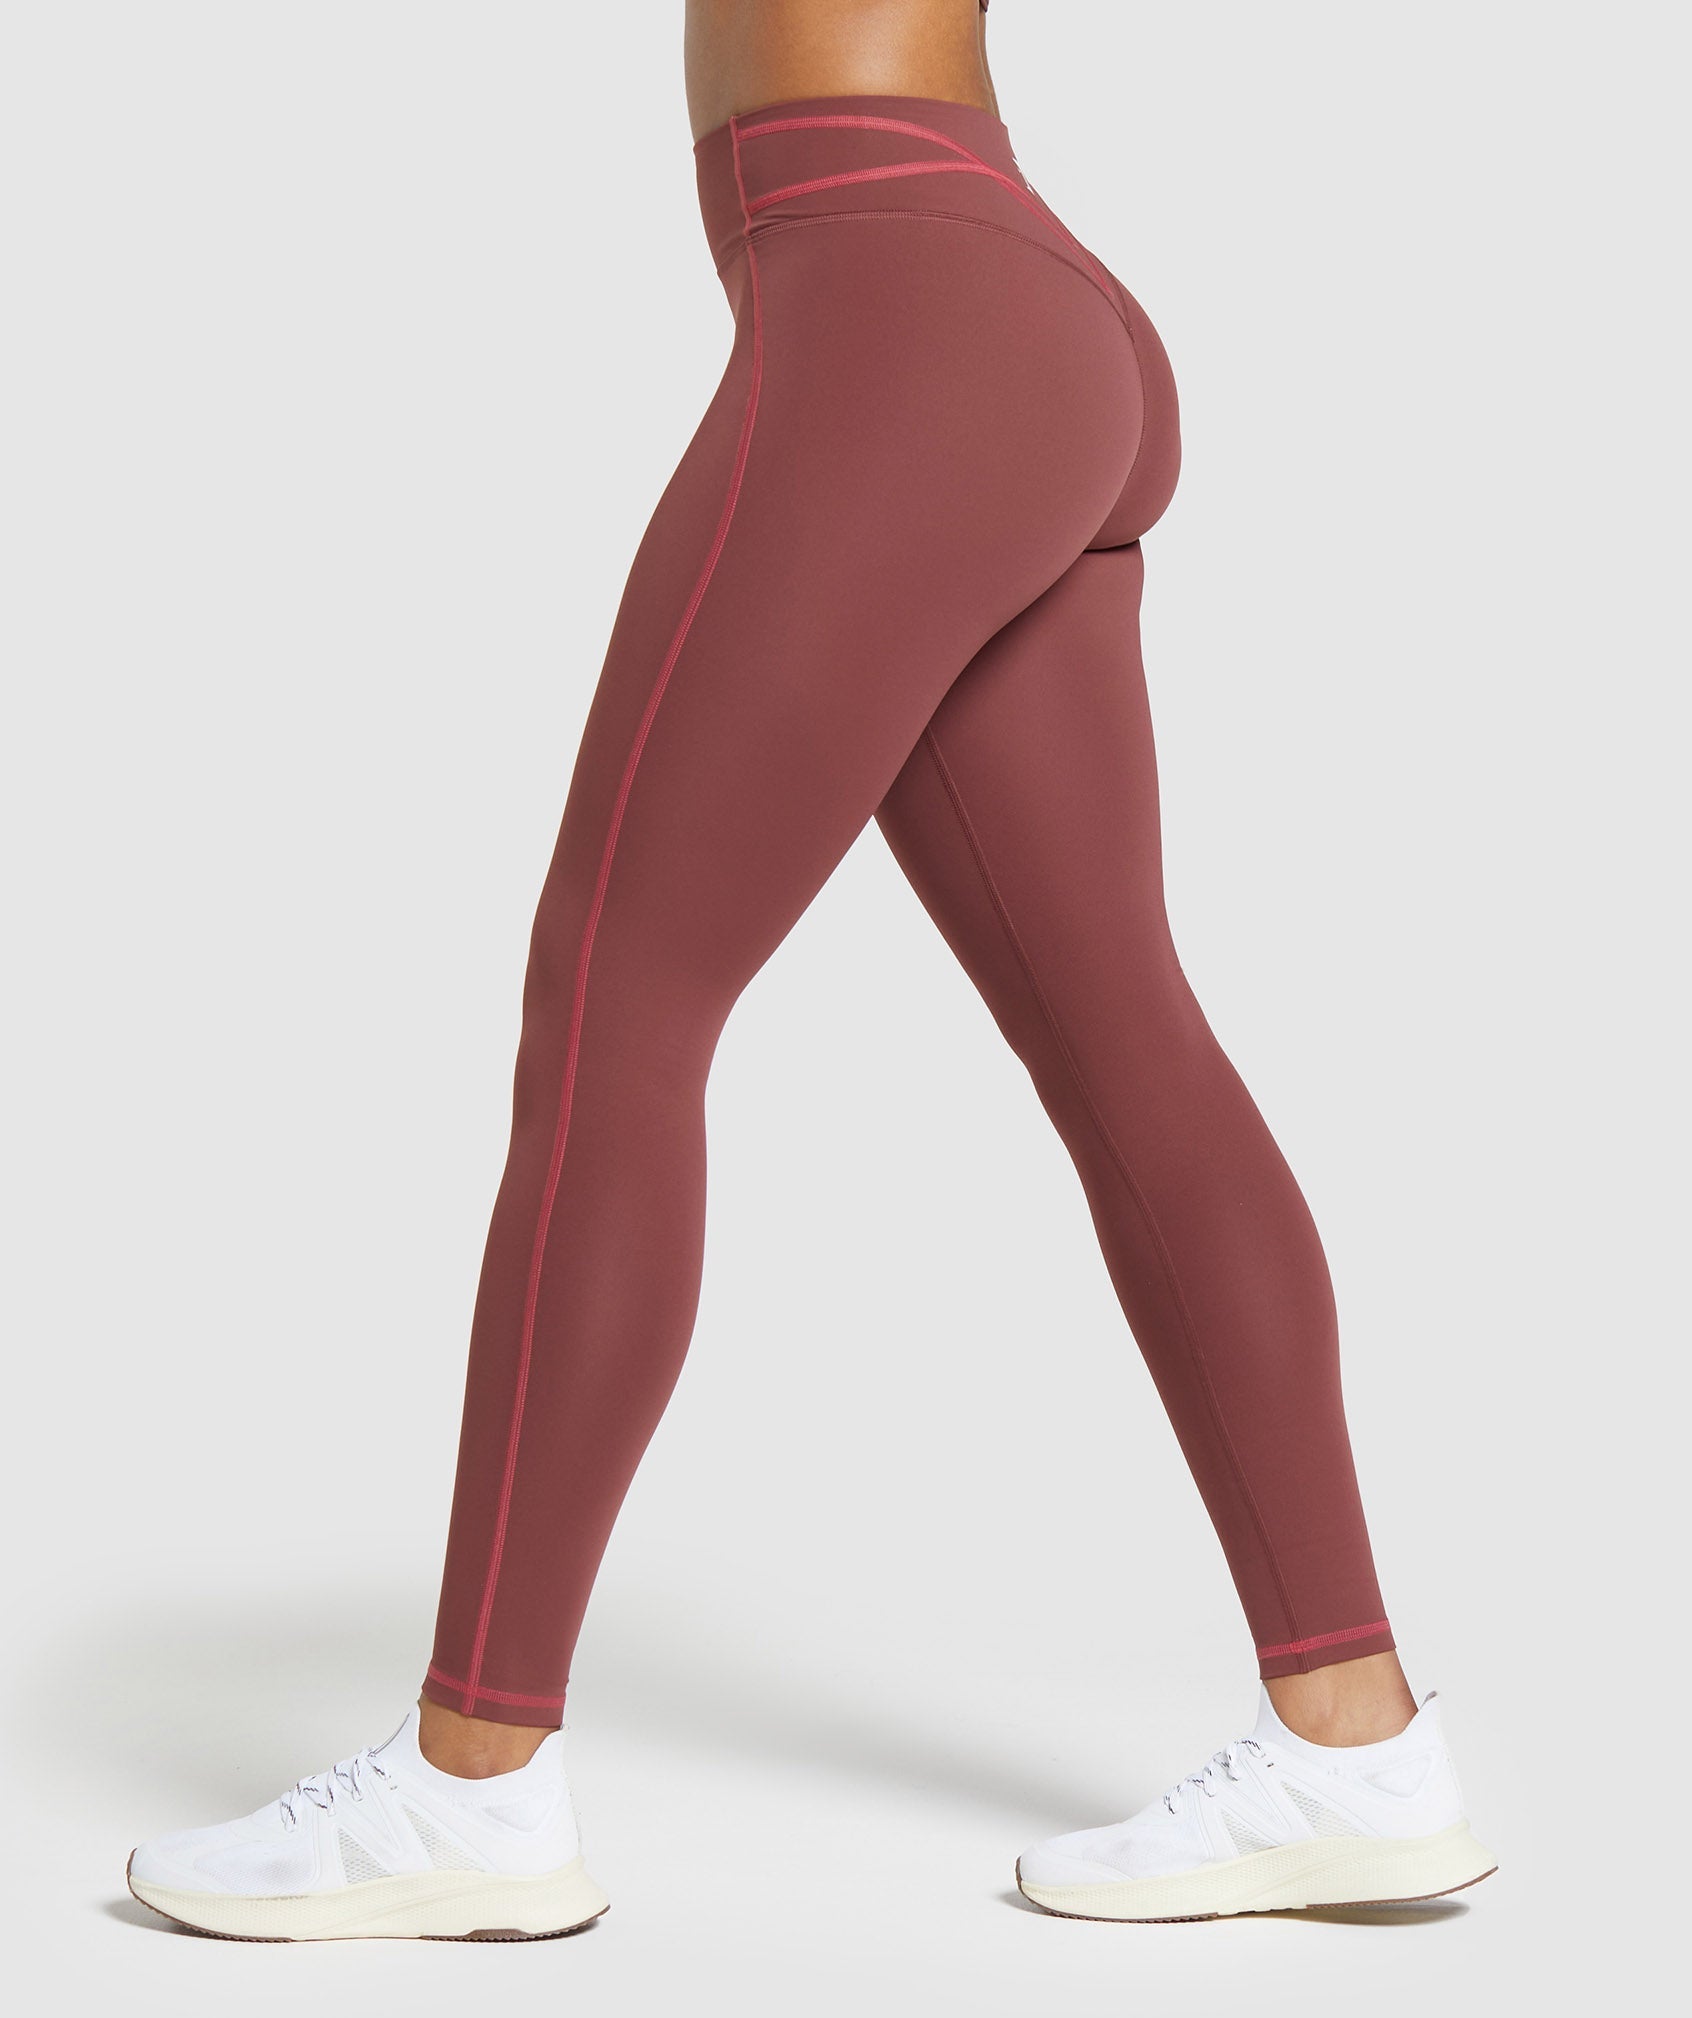 Gym Sprint burgundy sports legging